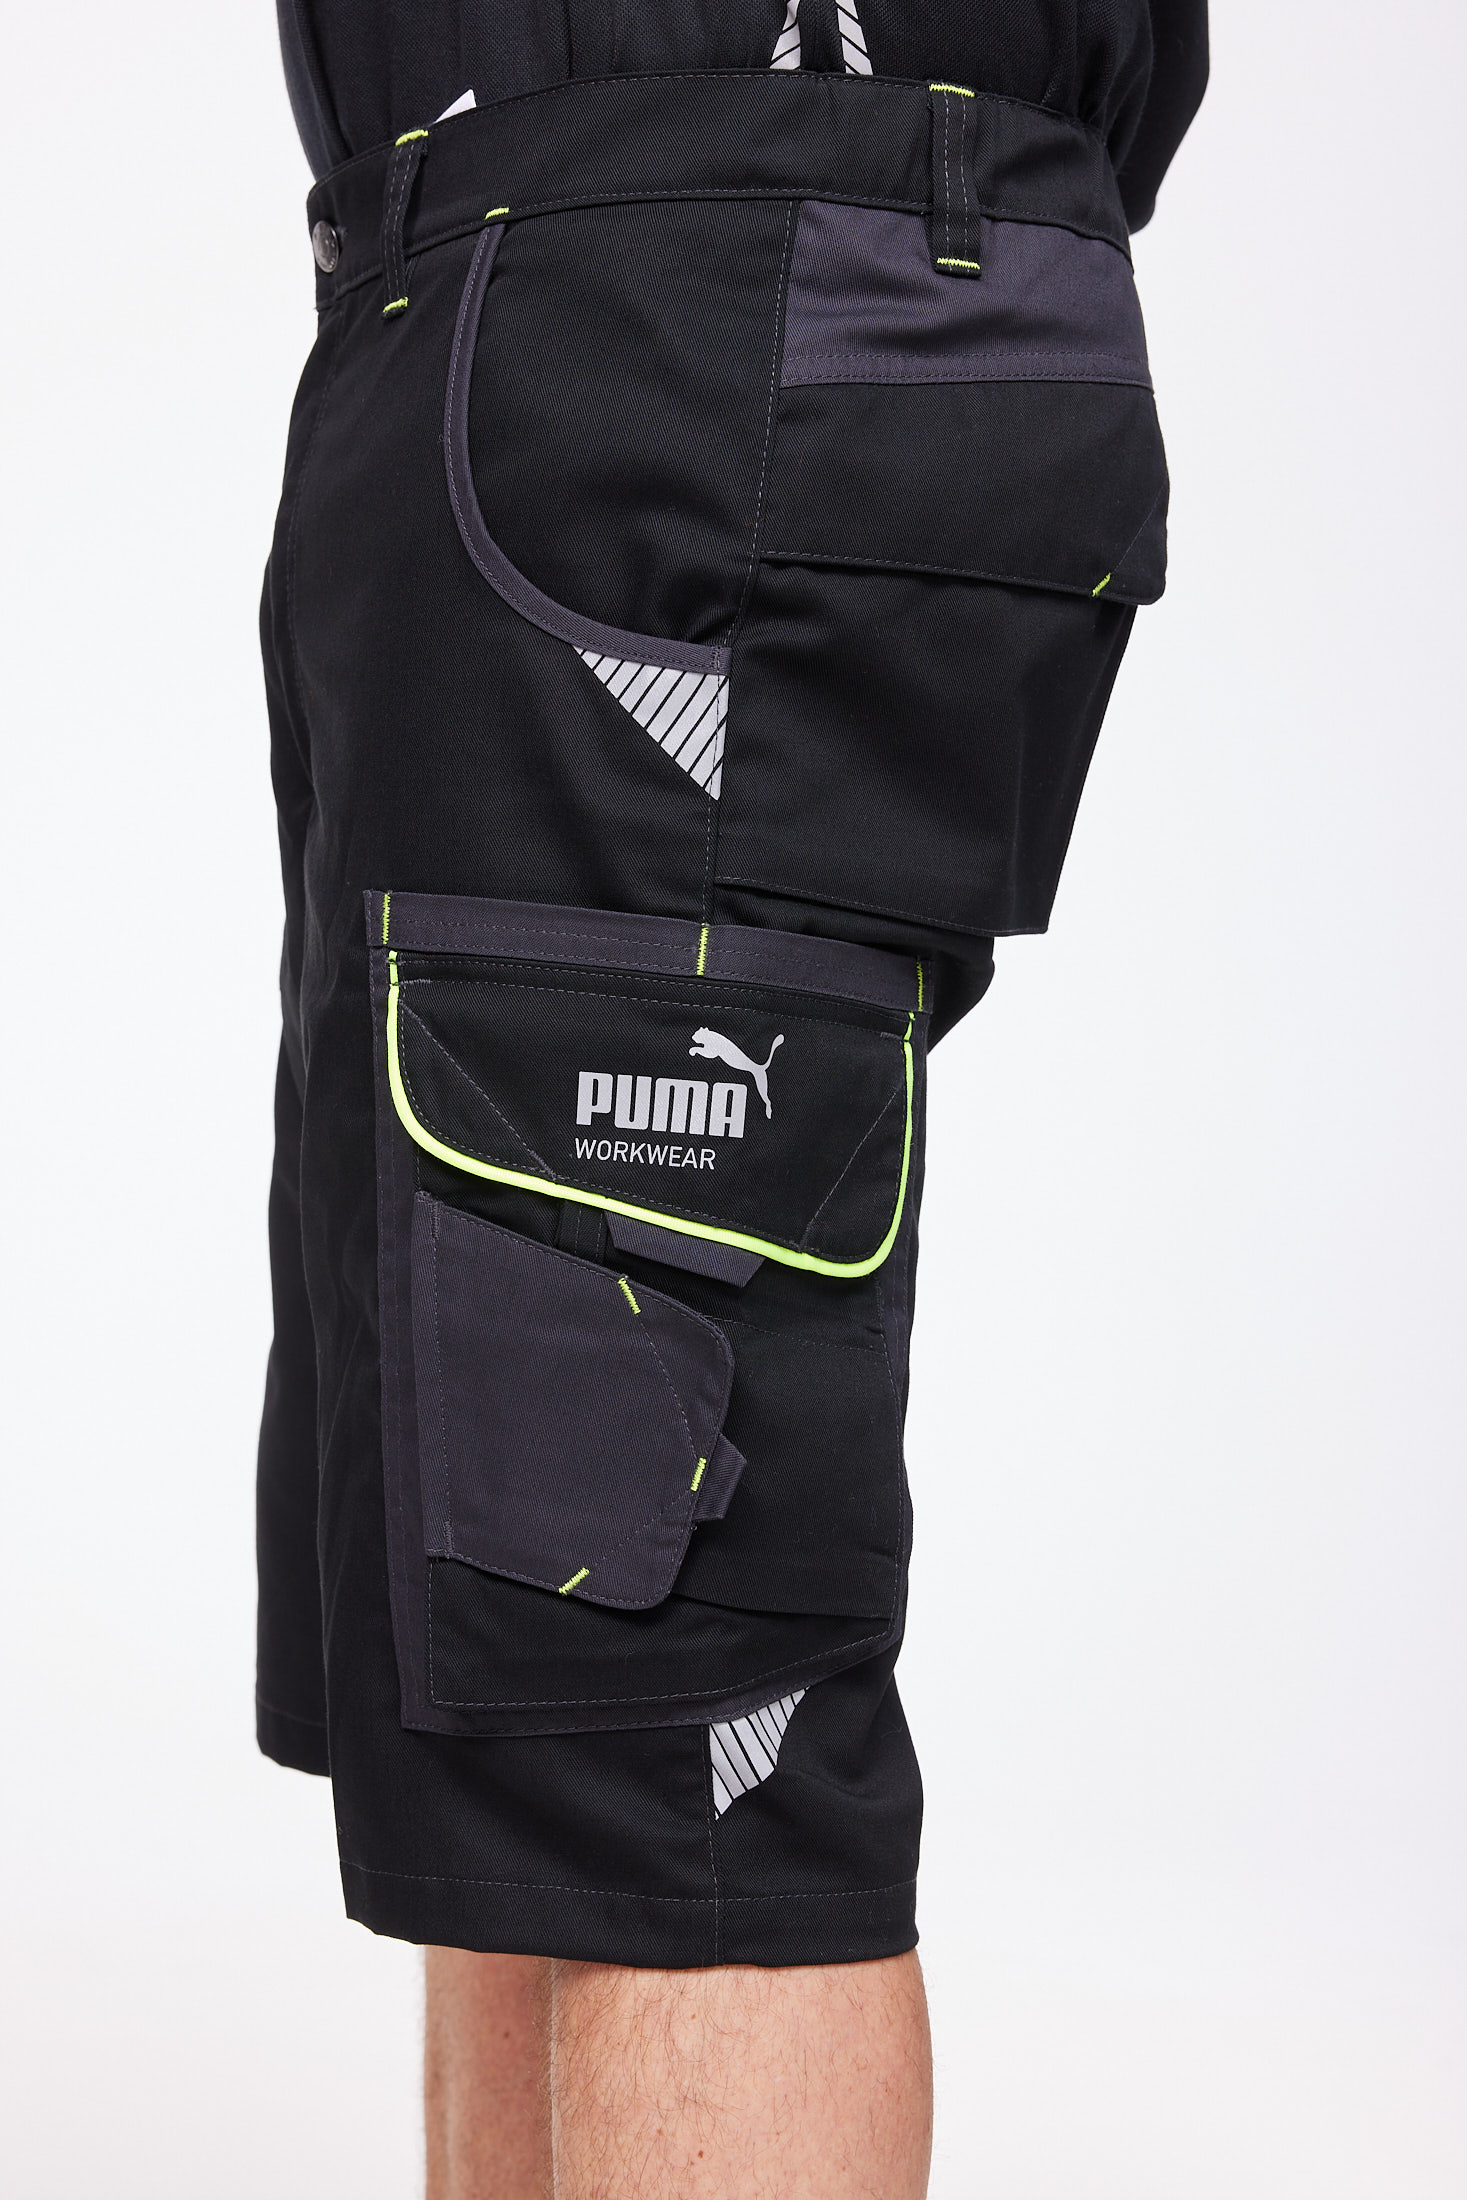 PUMA Workwear Precision X Herren Shorts | Puma Workwear